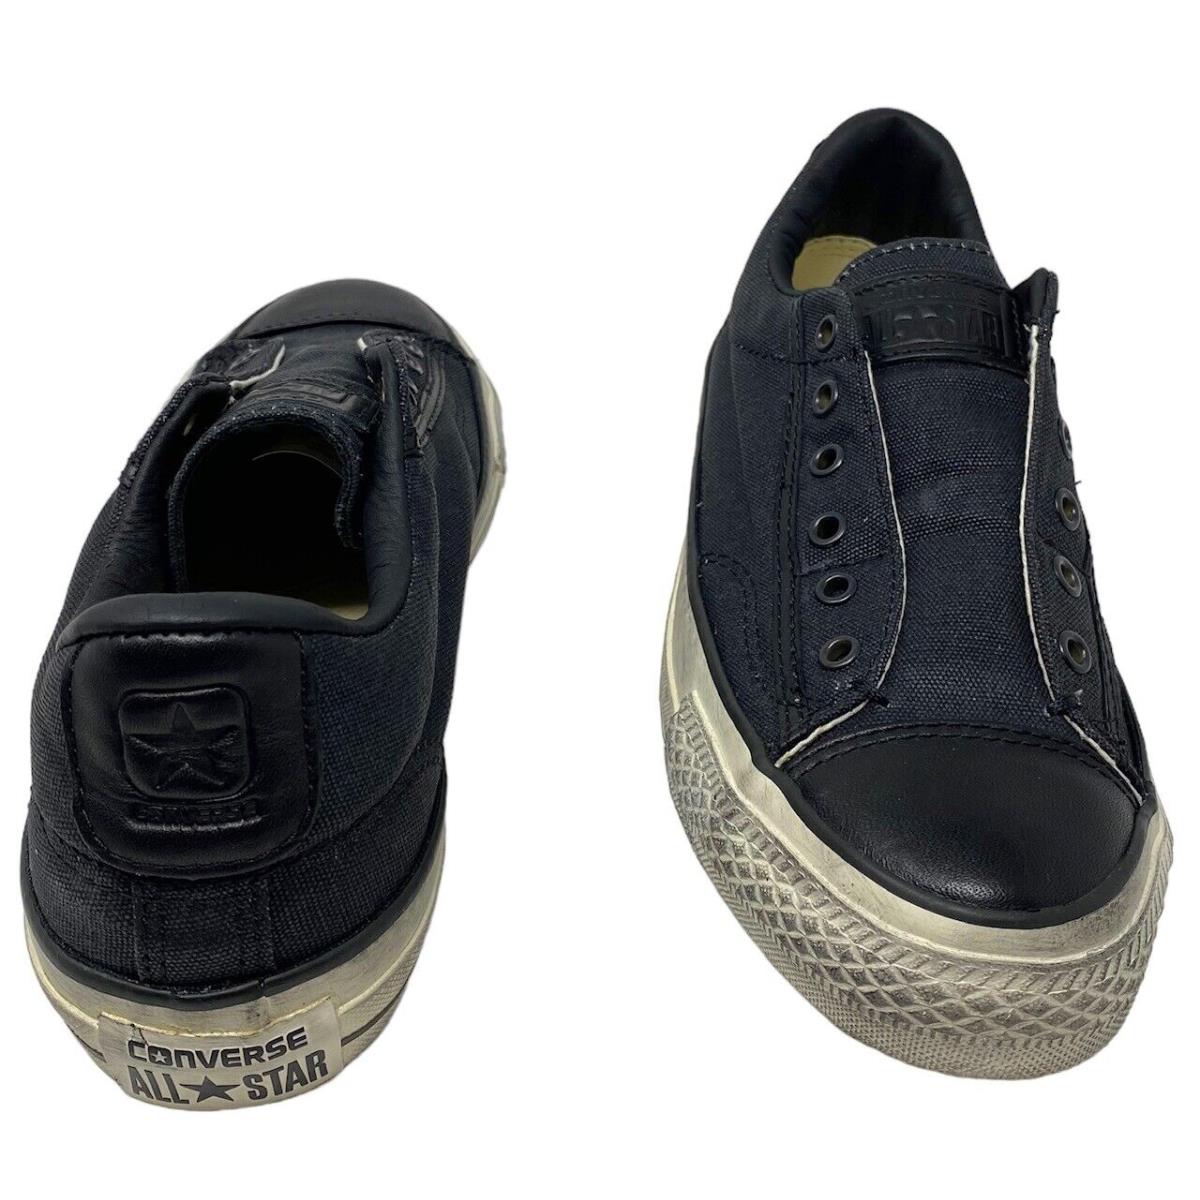 Converse Chuck Taylor X John Varvatos Laceless Slip-on Shoes in Burnished Black - Black